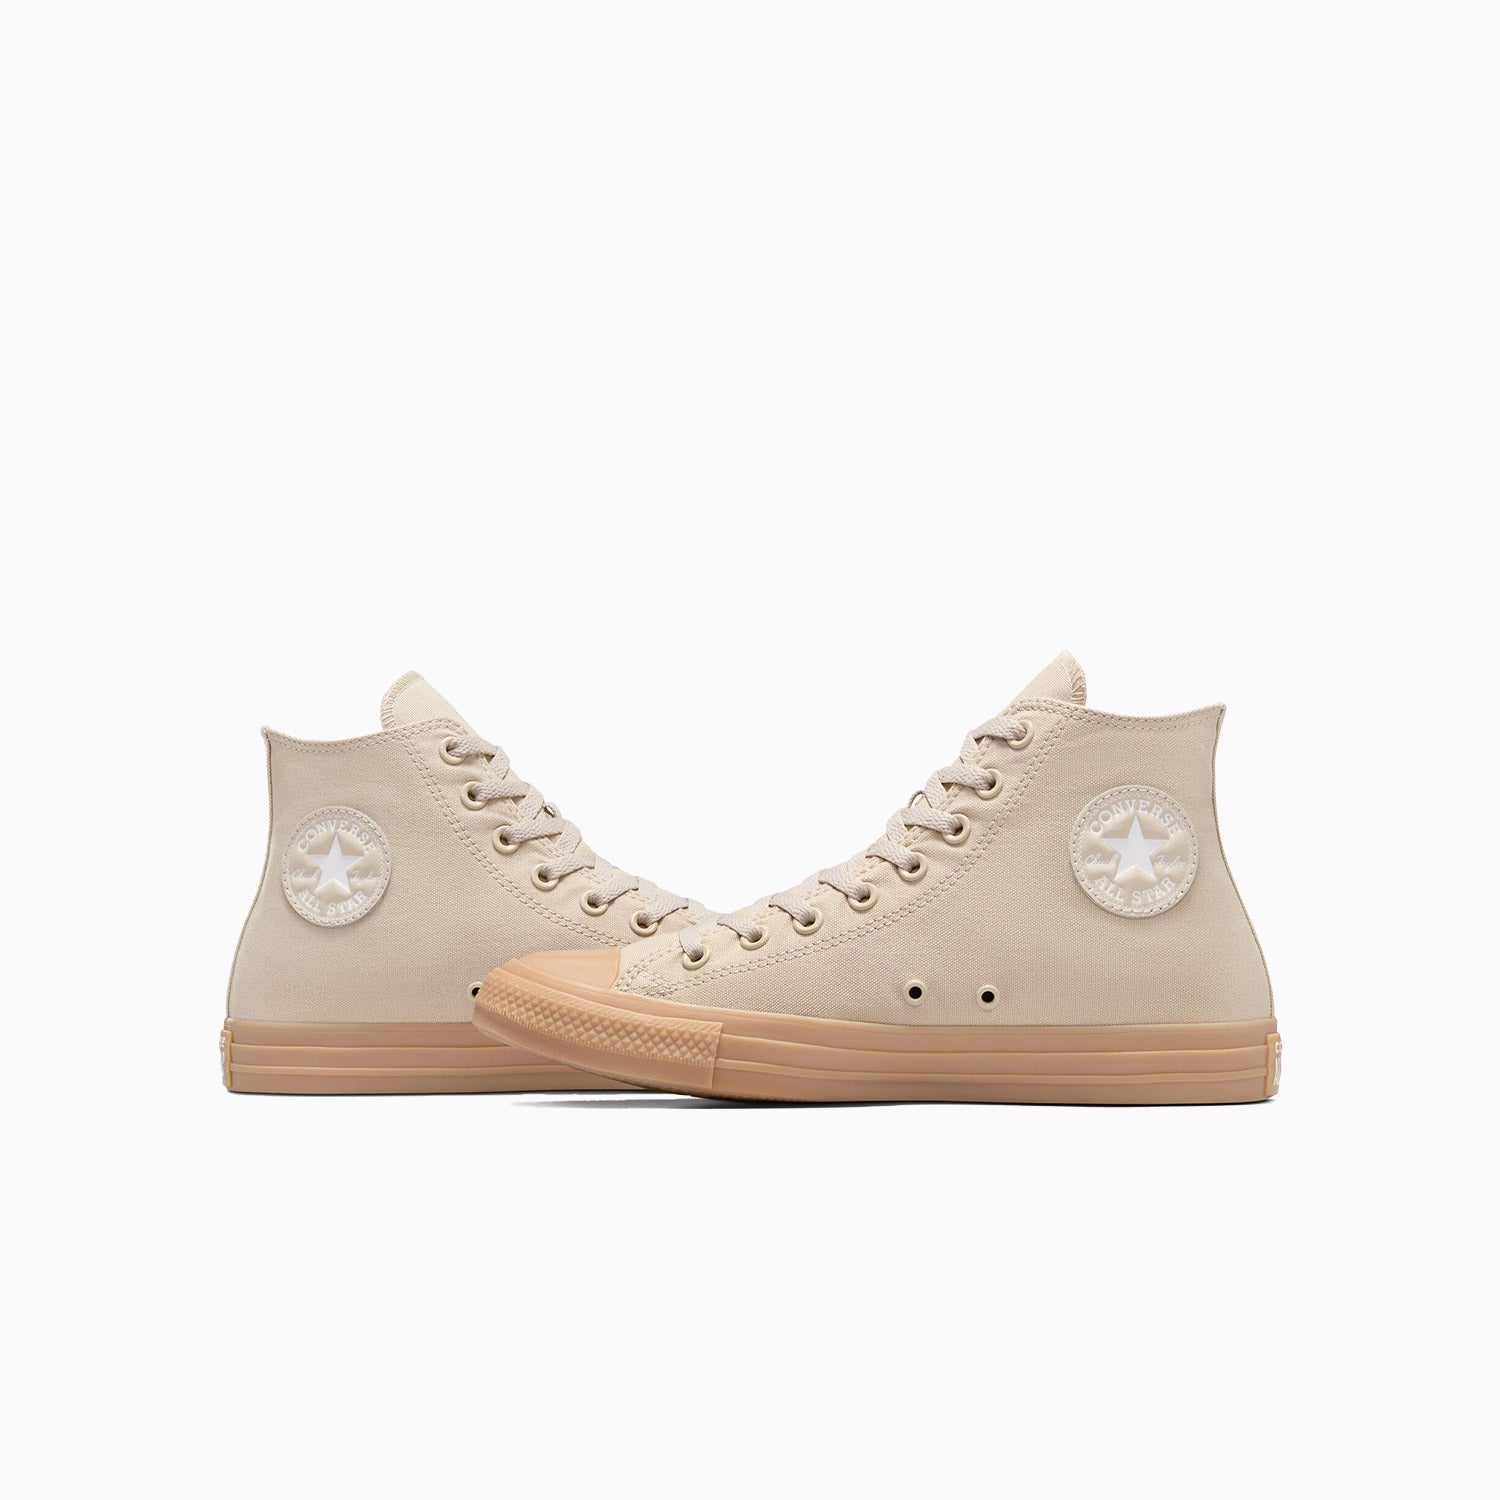 converse-chuck-taylor-all-star-monochrome-shoes-a09824c